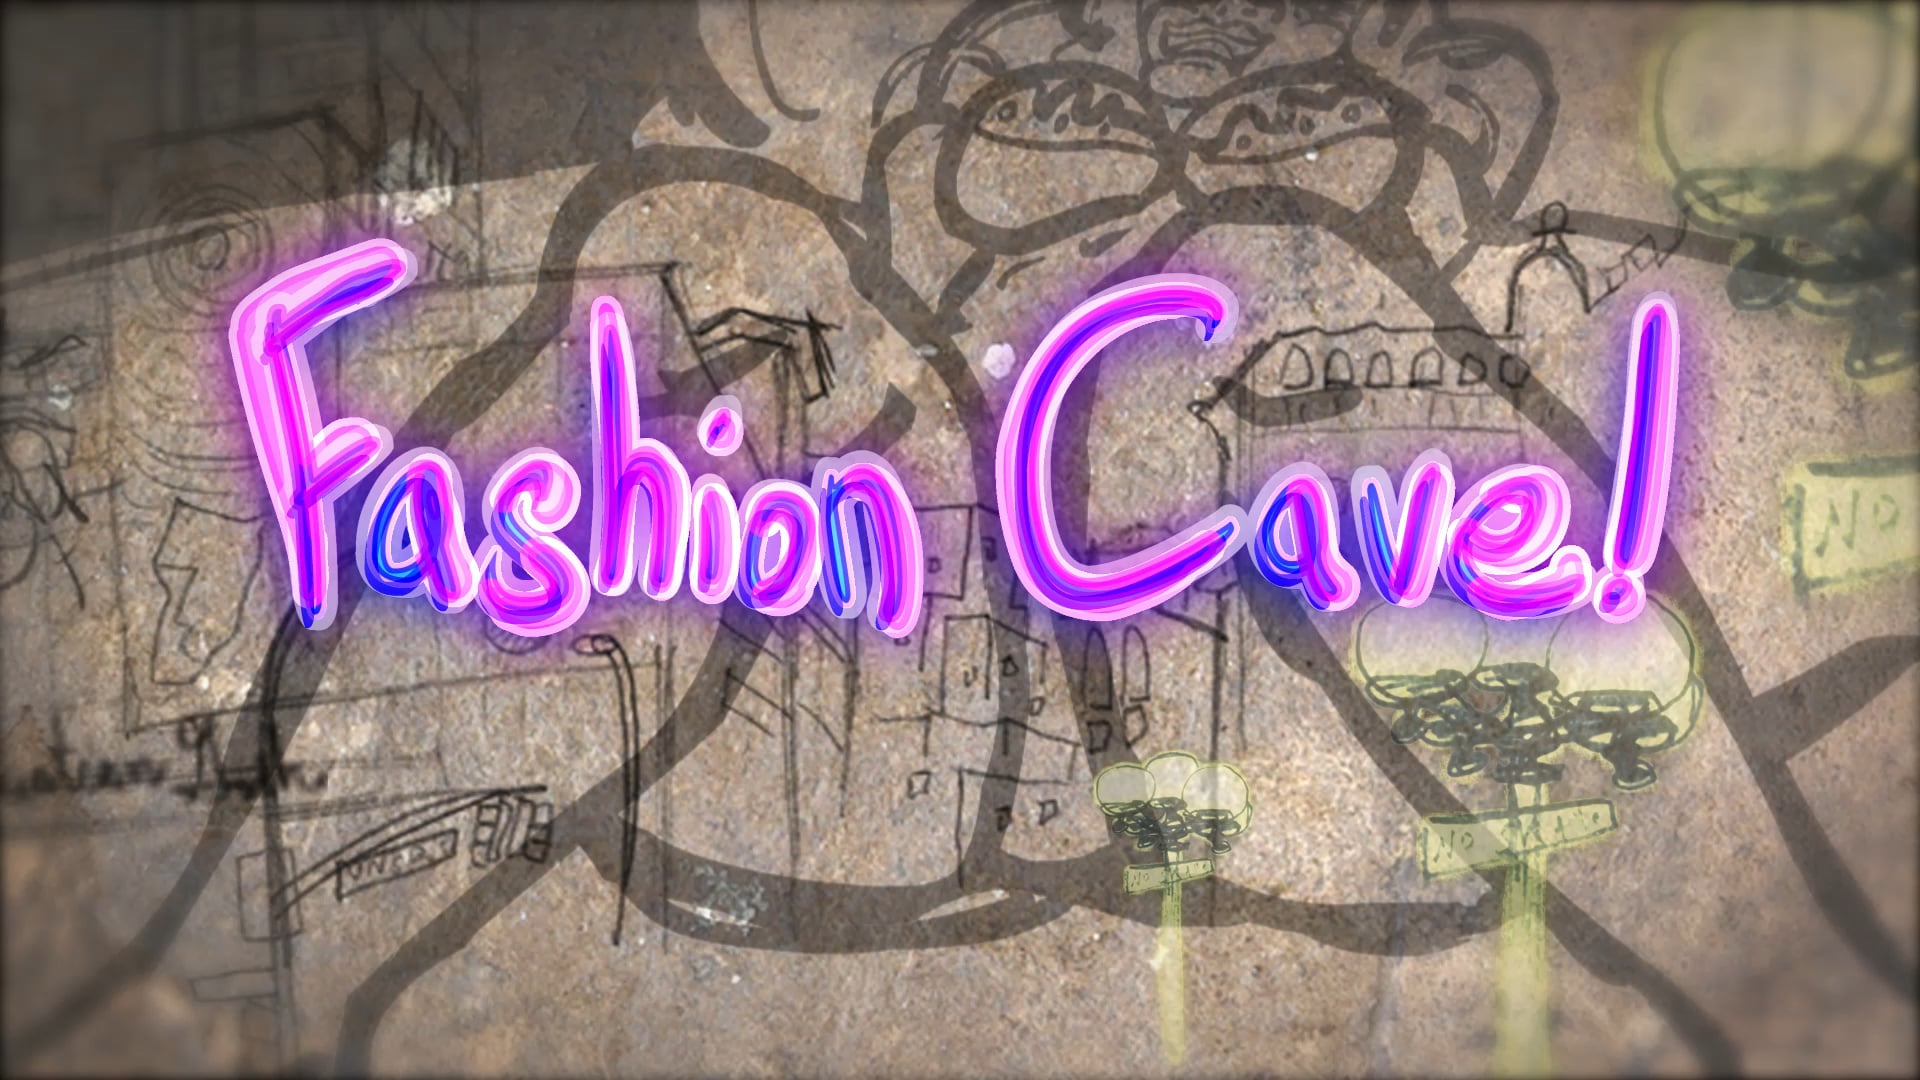 Fashion Cave!